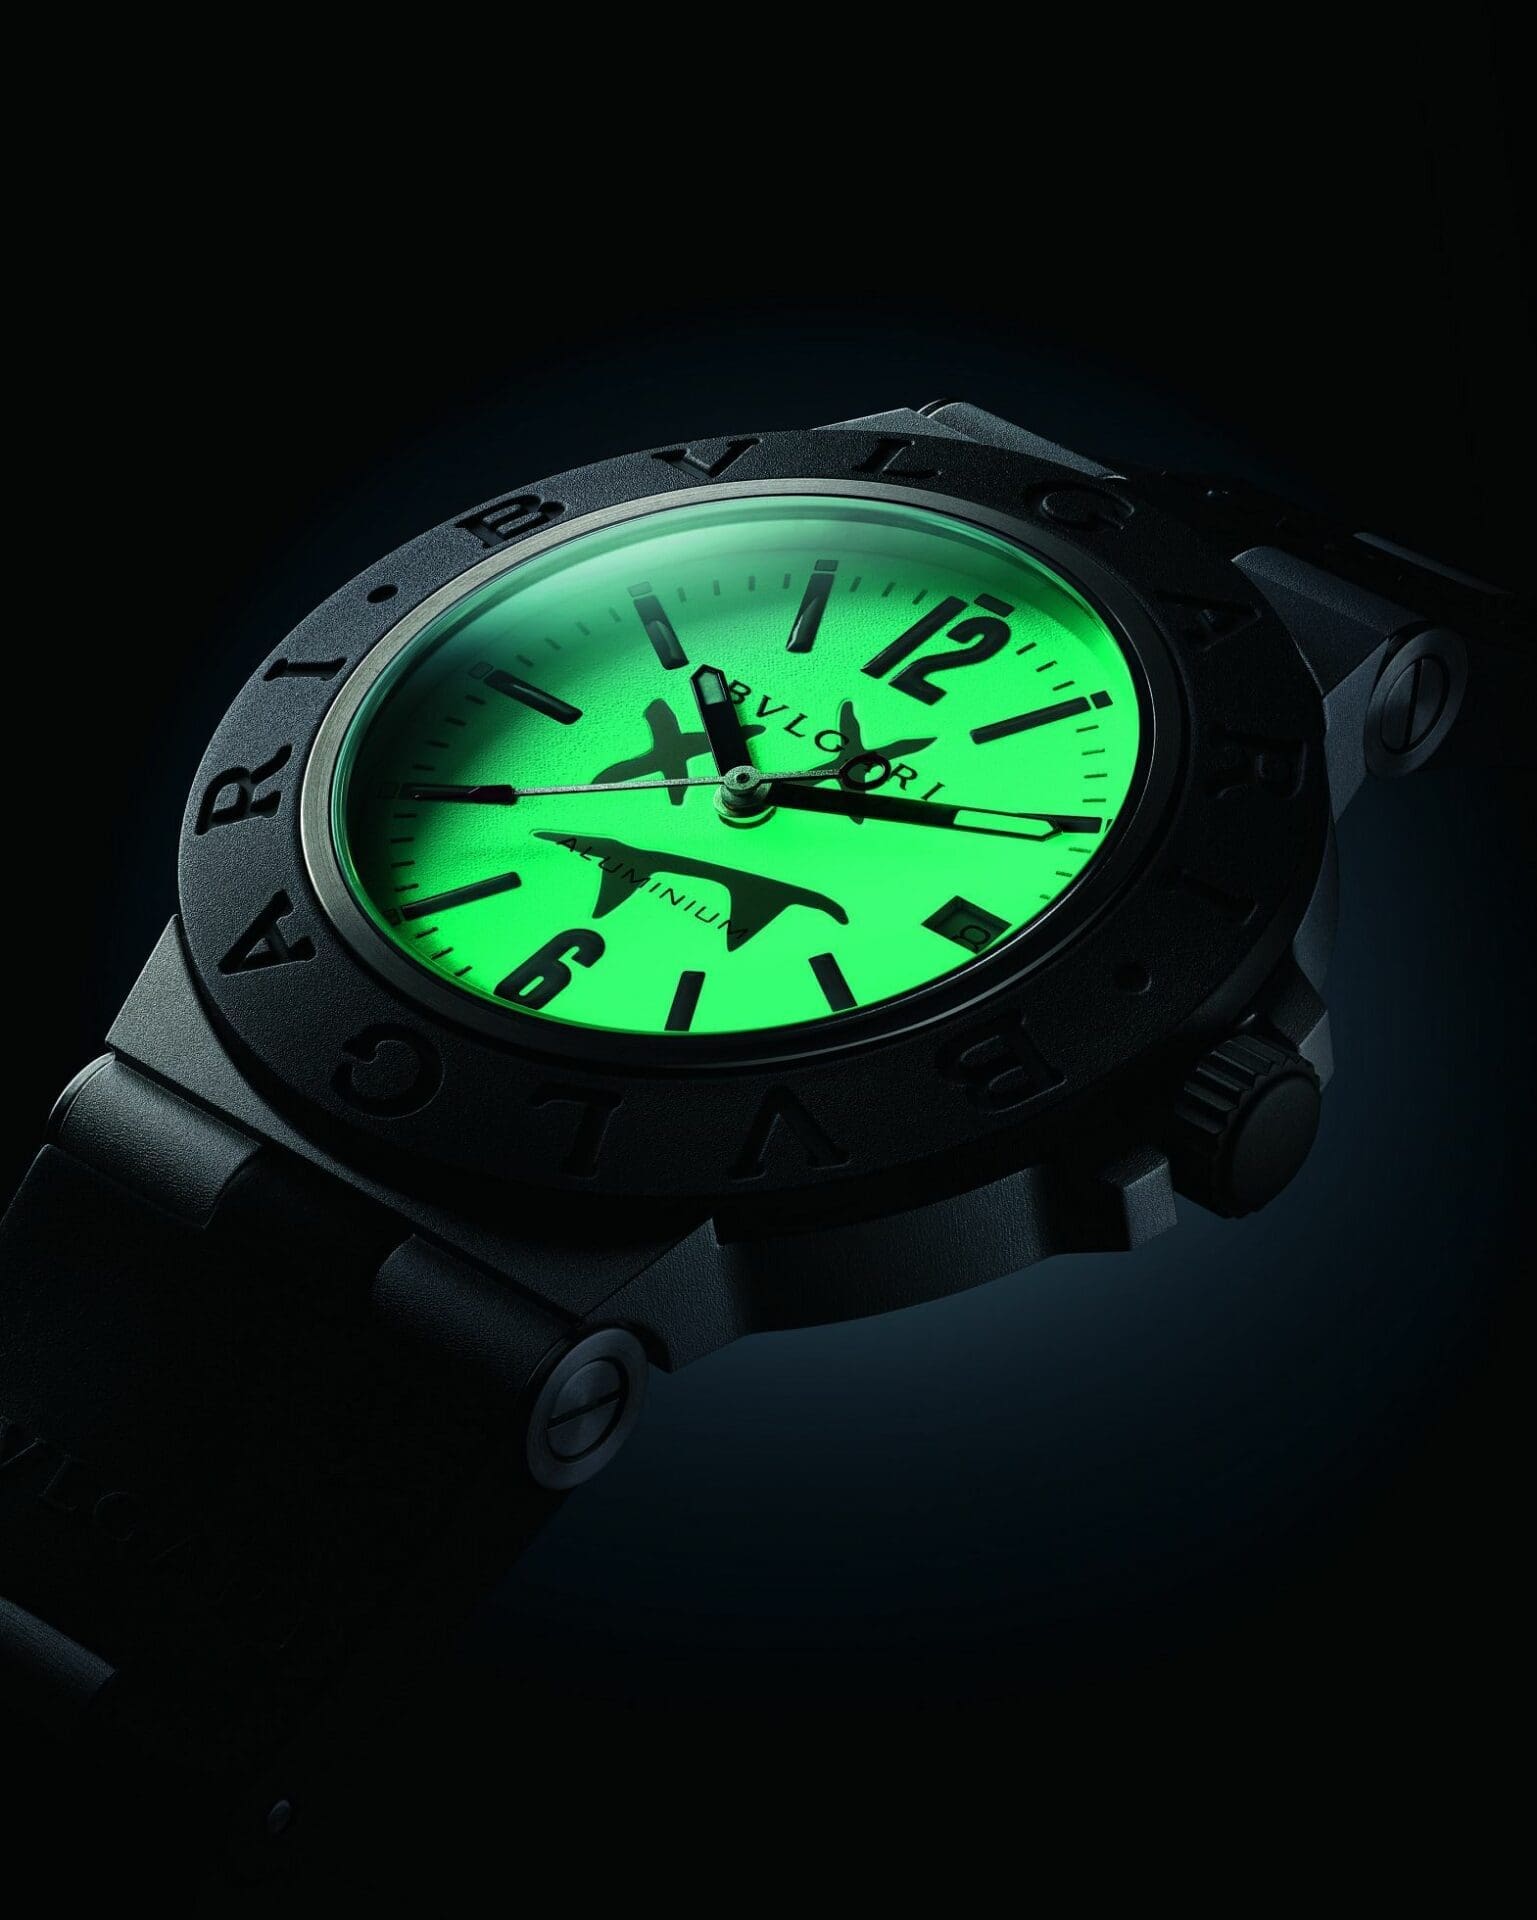 Beyond the rave: the Bulgari Aluminium Steve Aoki is the latest watch inspired by dance music alongside Zenith & Chanel